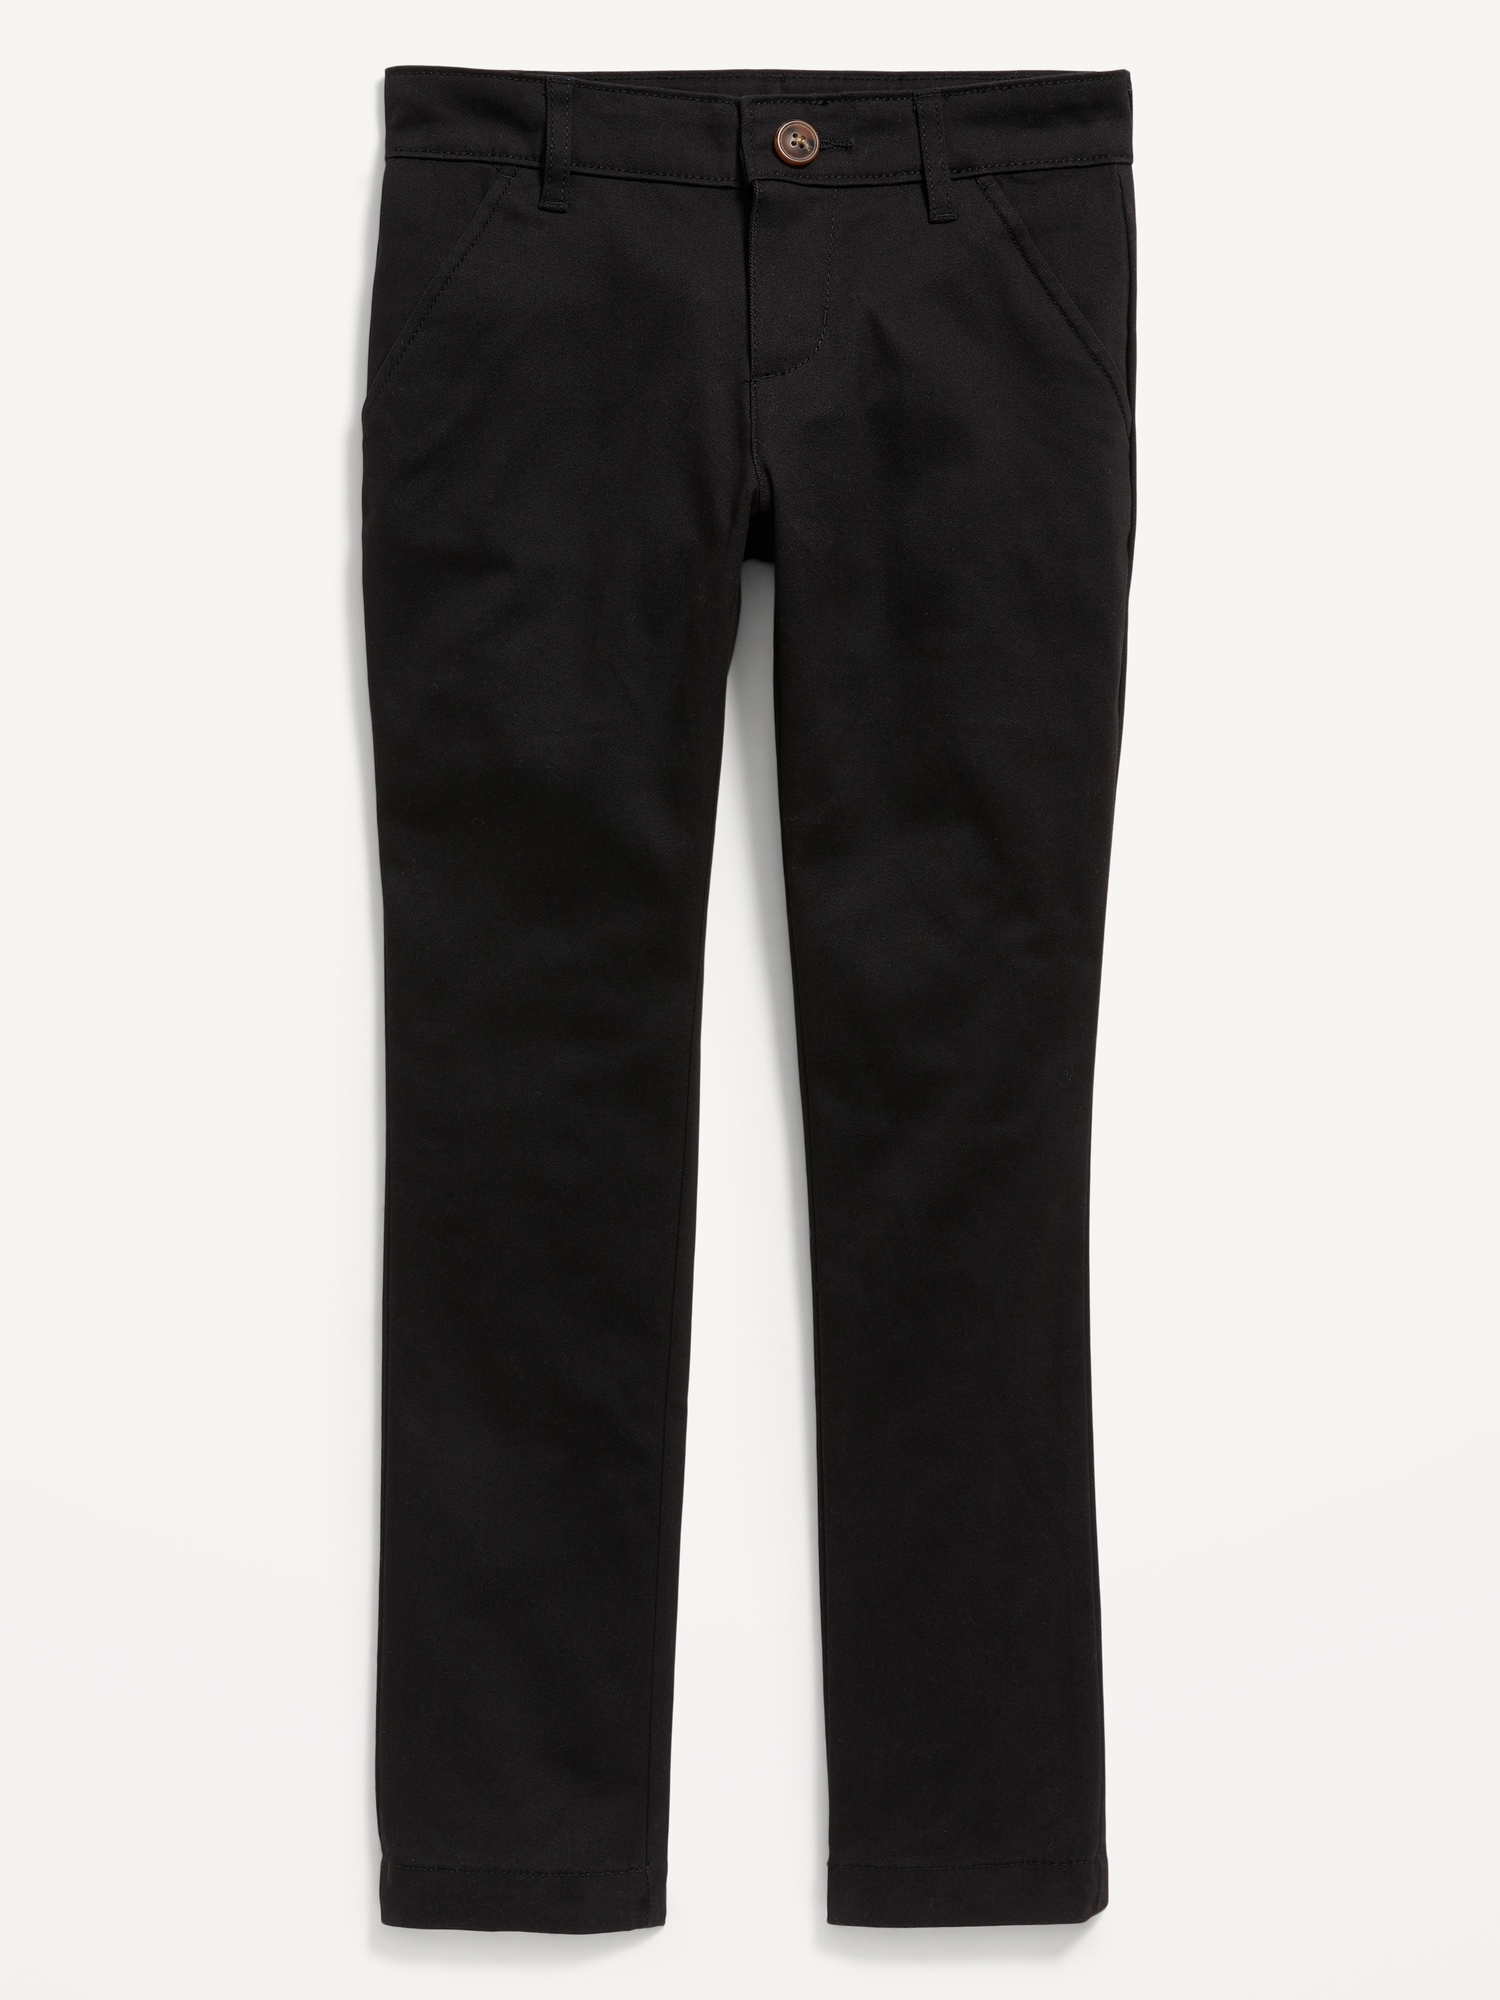 School Uniform Skinny Chino Pants 2-Pack for Girls